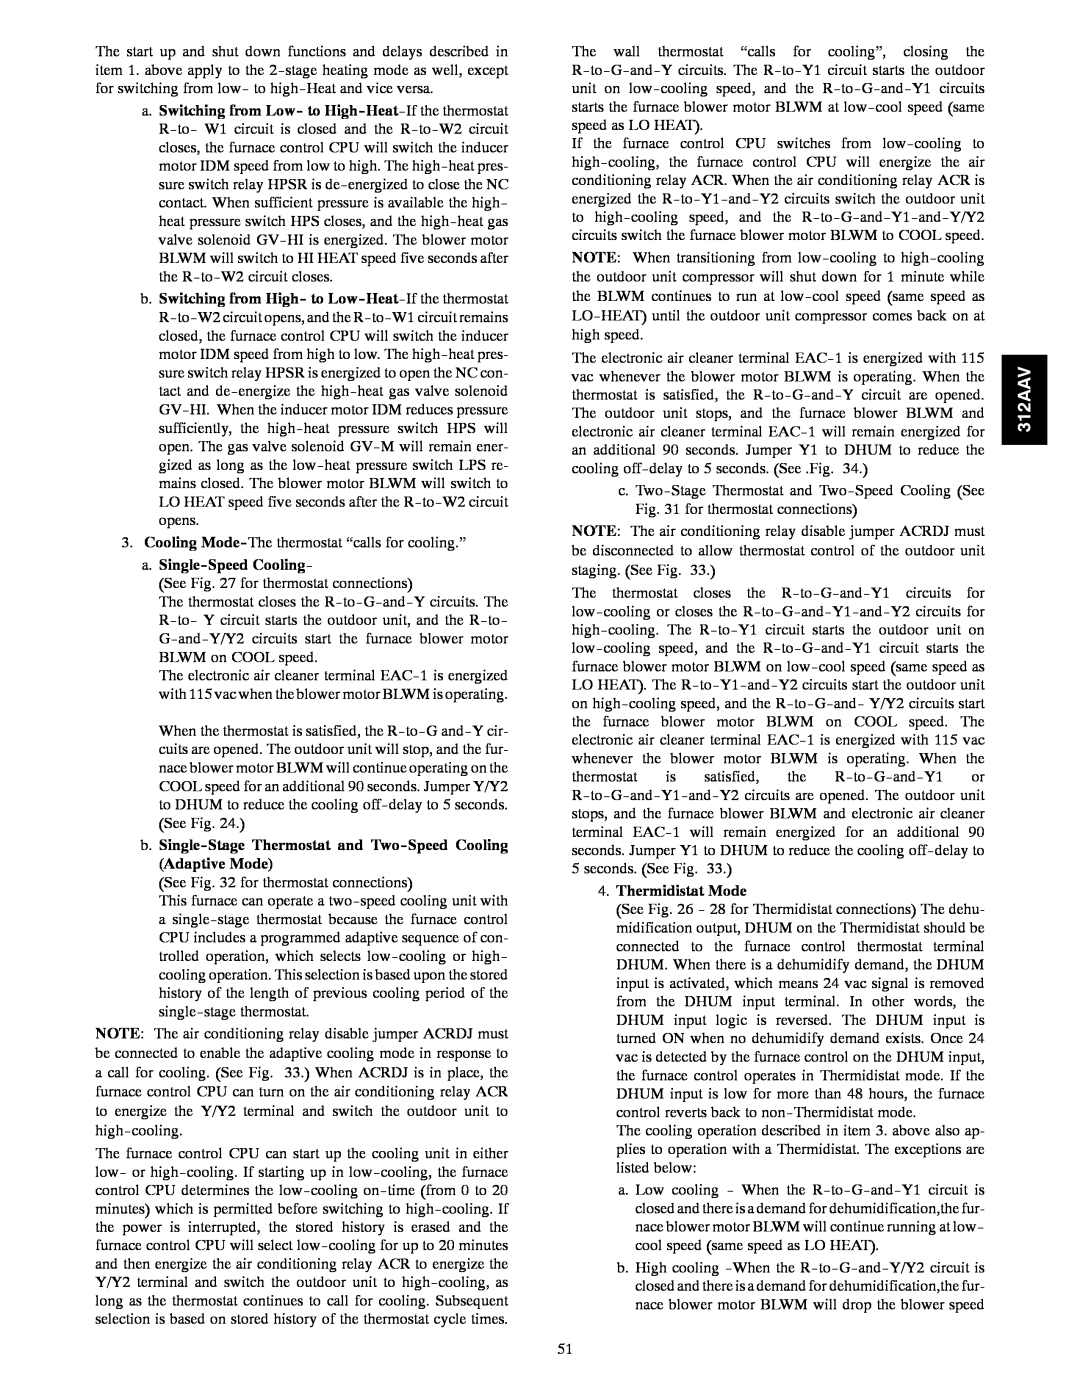 Bryant 312AAV/JAV instruction manual a.Single-SpeedCooling, Thermidistat Mode 